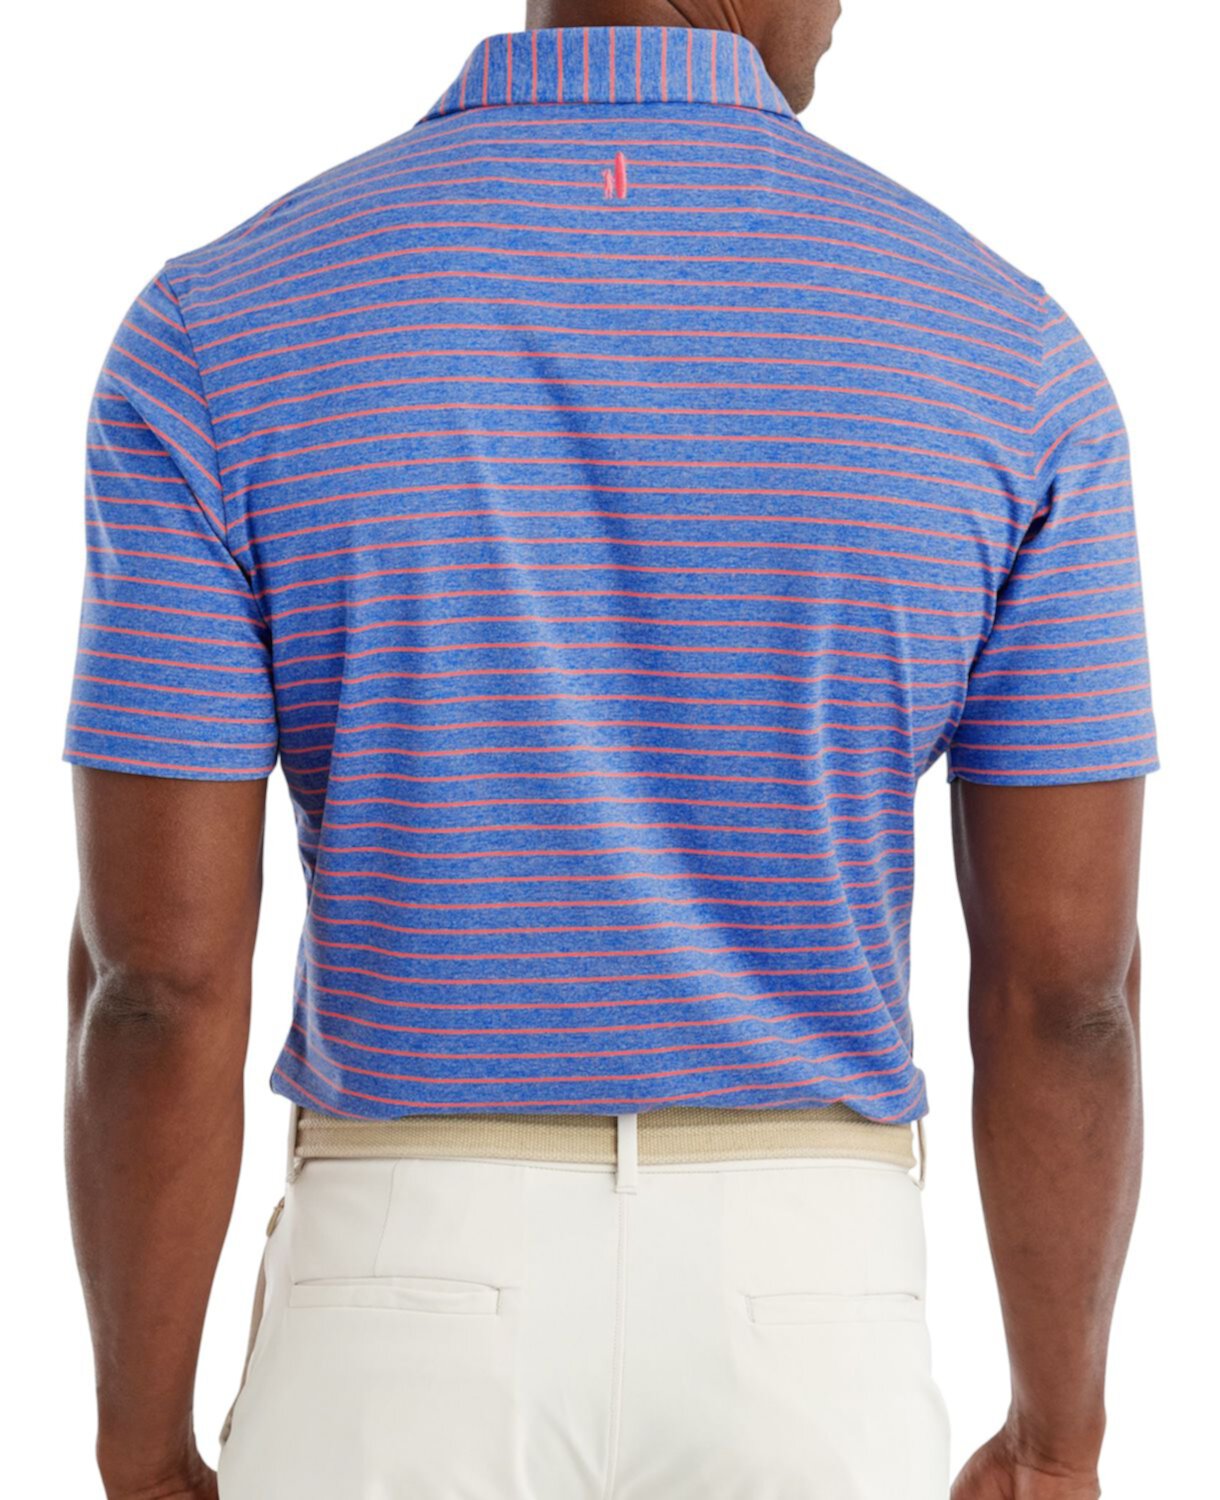 Поло Nash Polo Shirt 2021 (XL). Полосатая рубашка us Polo. Поло ньютон